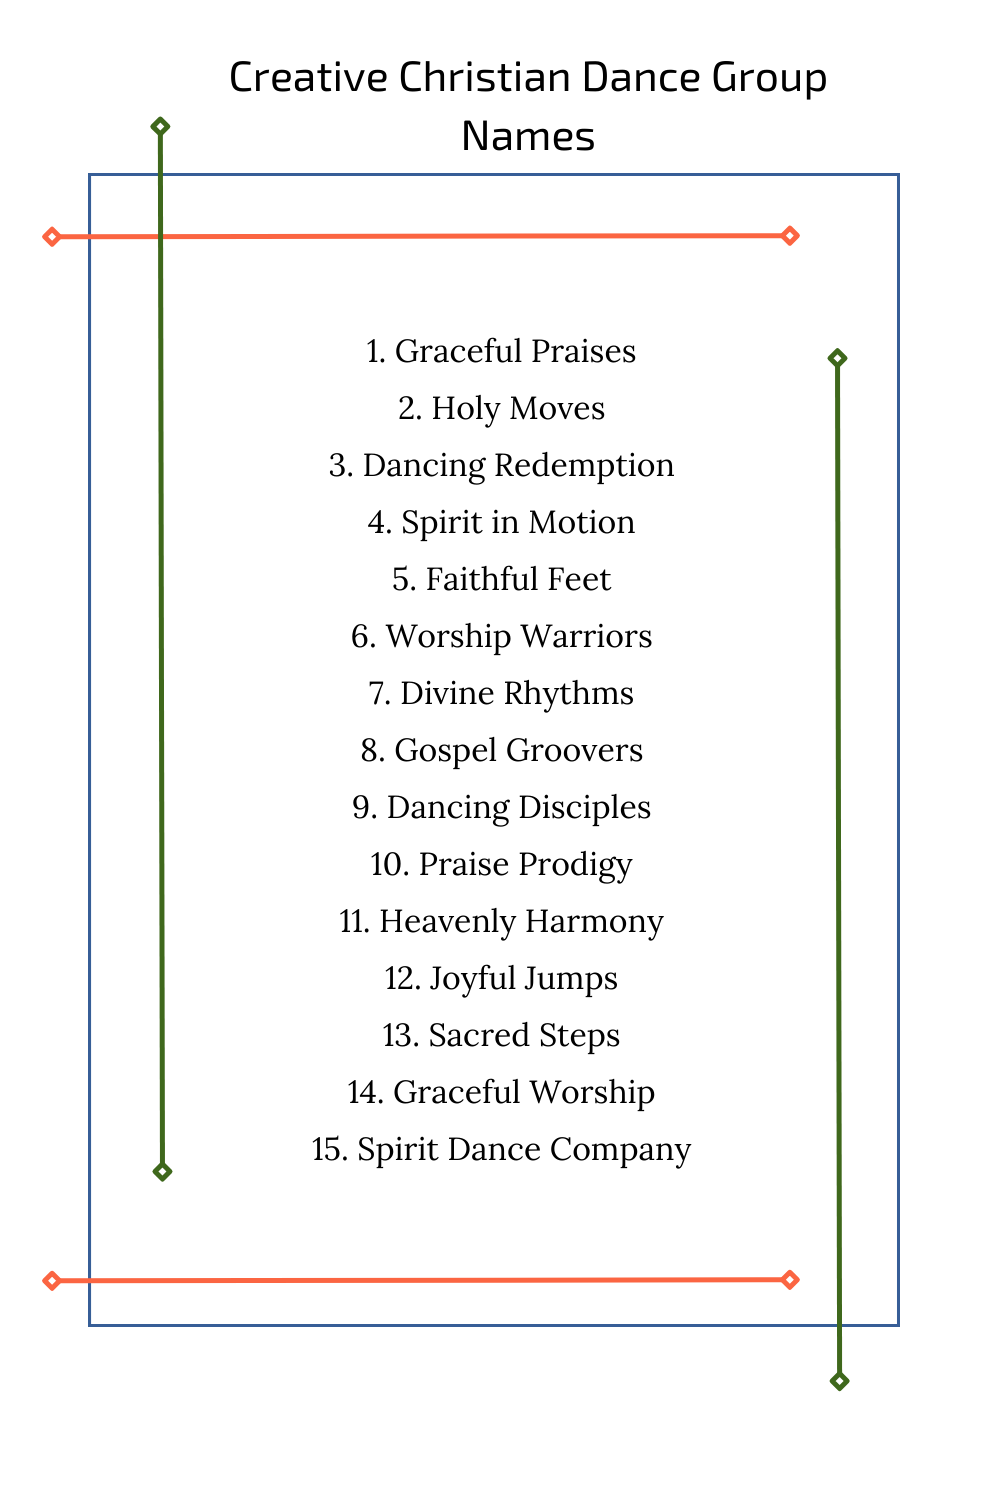 Creative Christian Dance Group Names